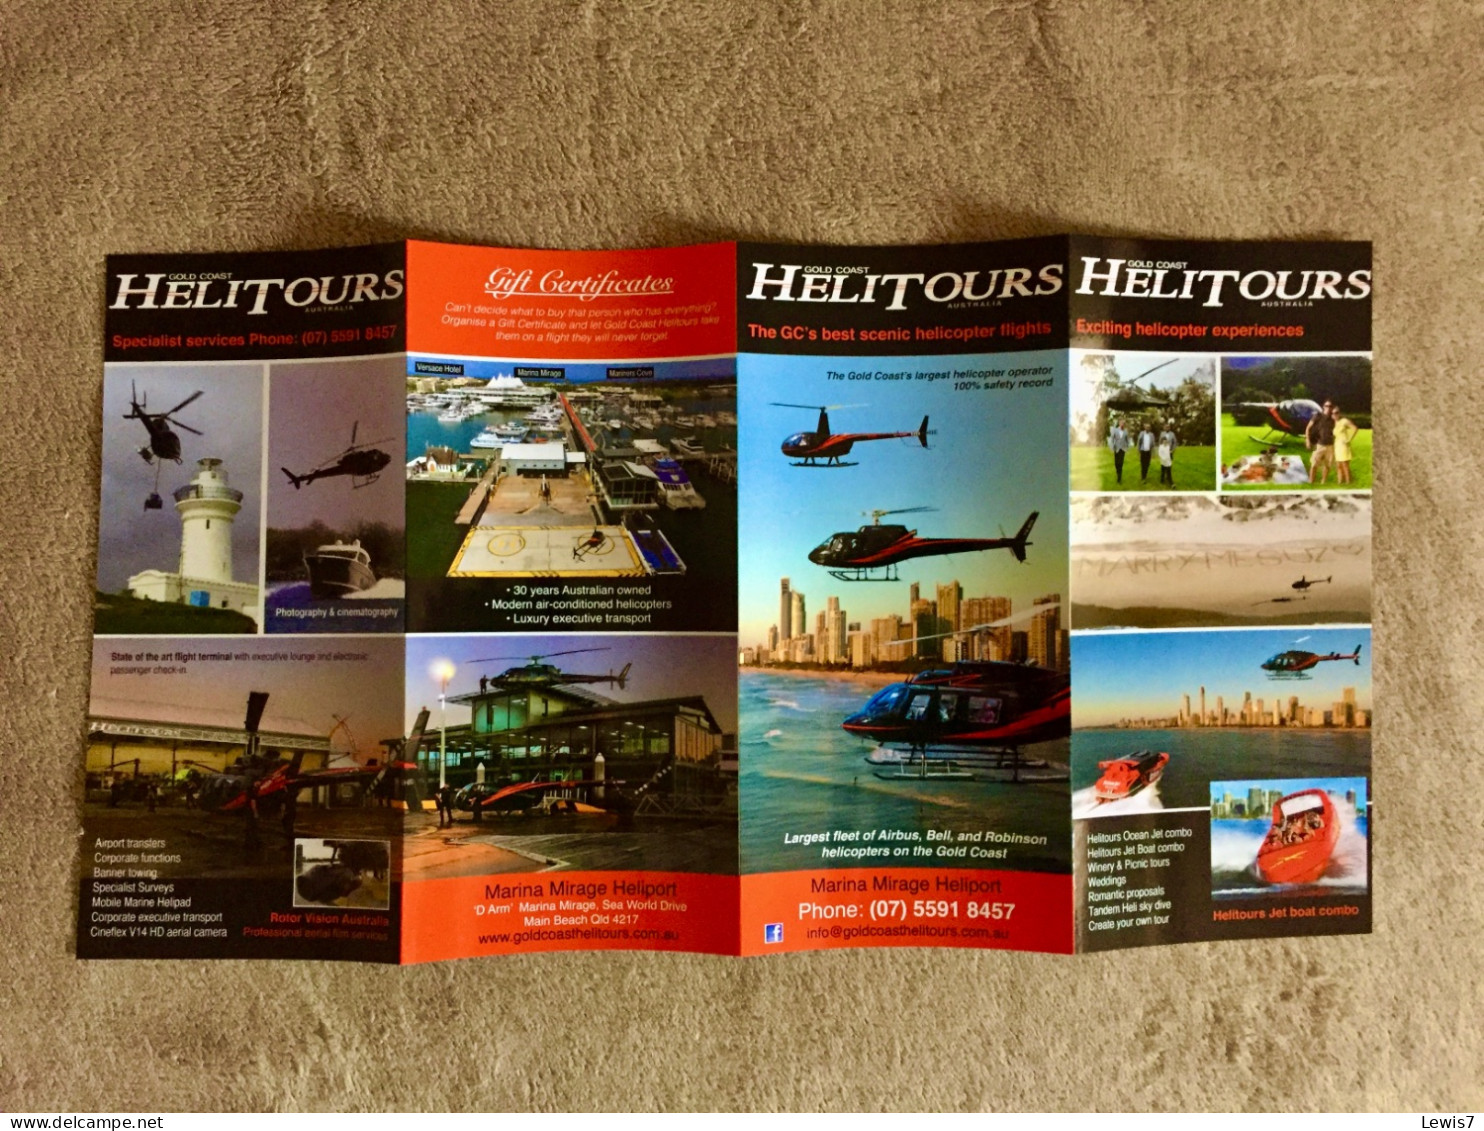 Brochure : HELICOPTER TOURS - Australia - Elicotteri